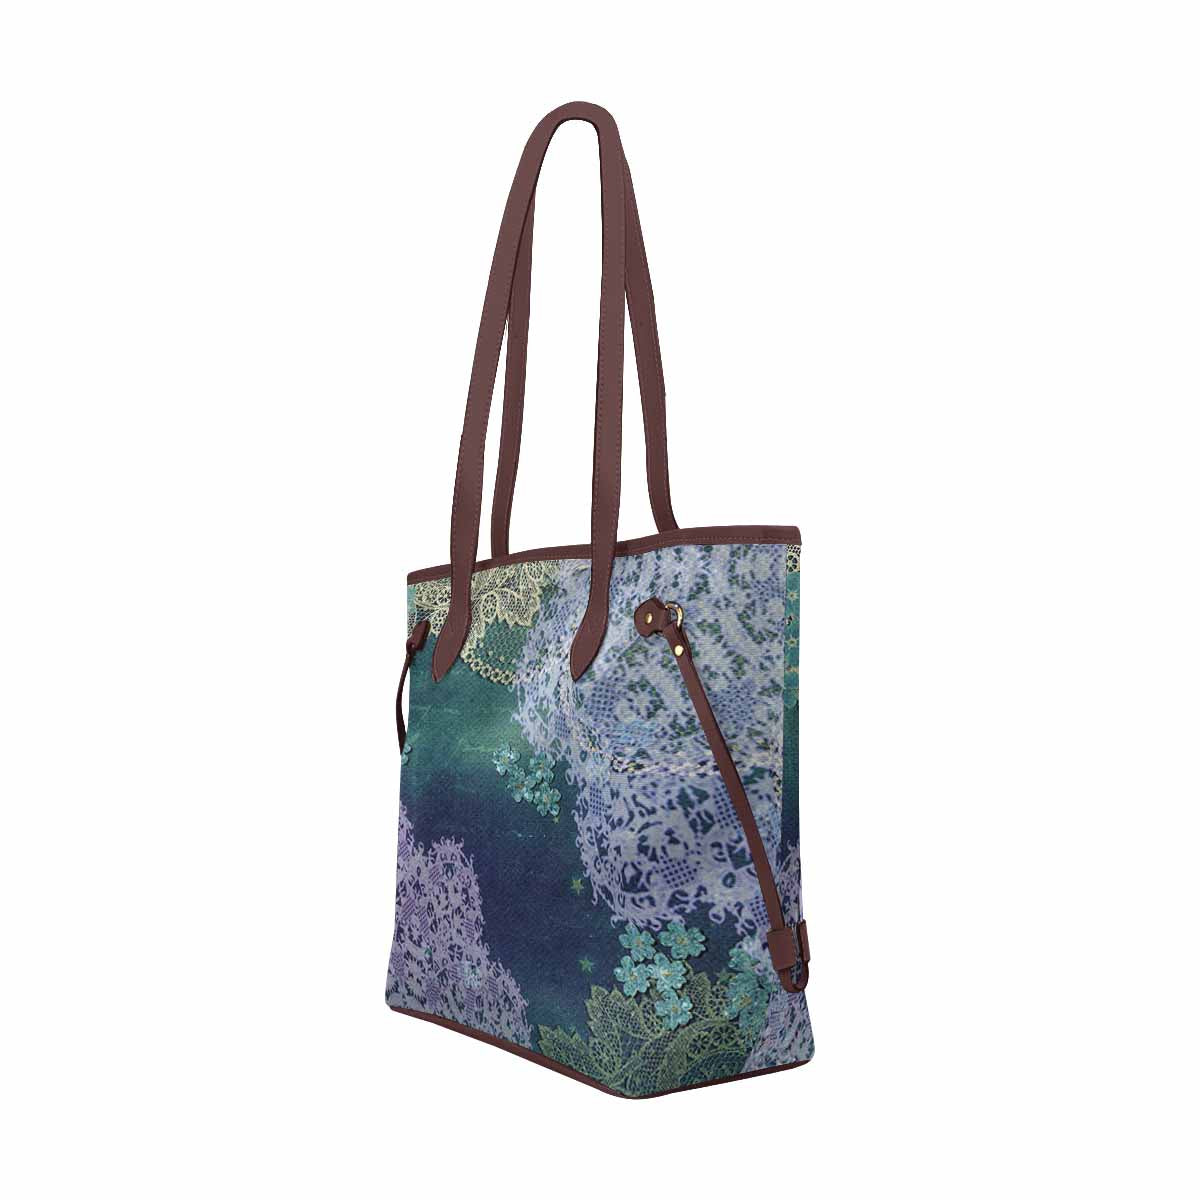 Victorian printed lace handbag, MODEL 1695361 Design 05